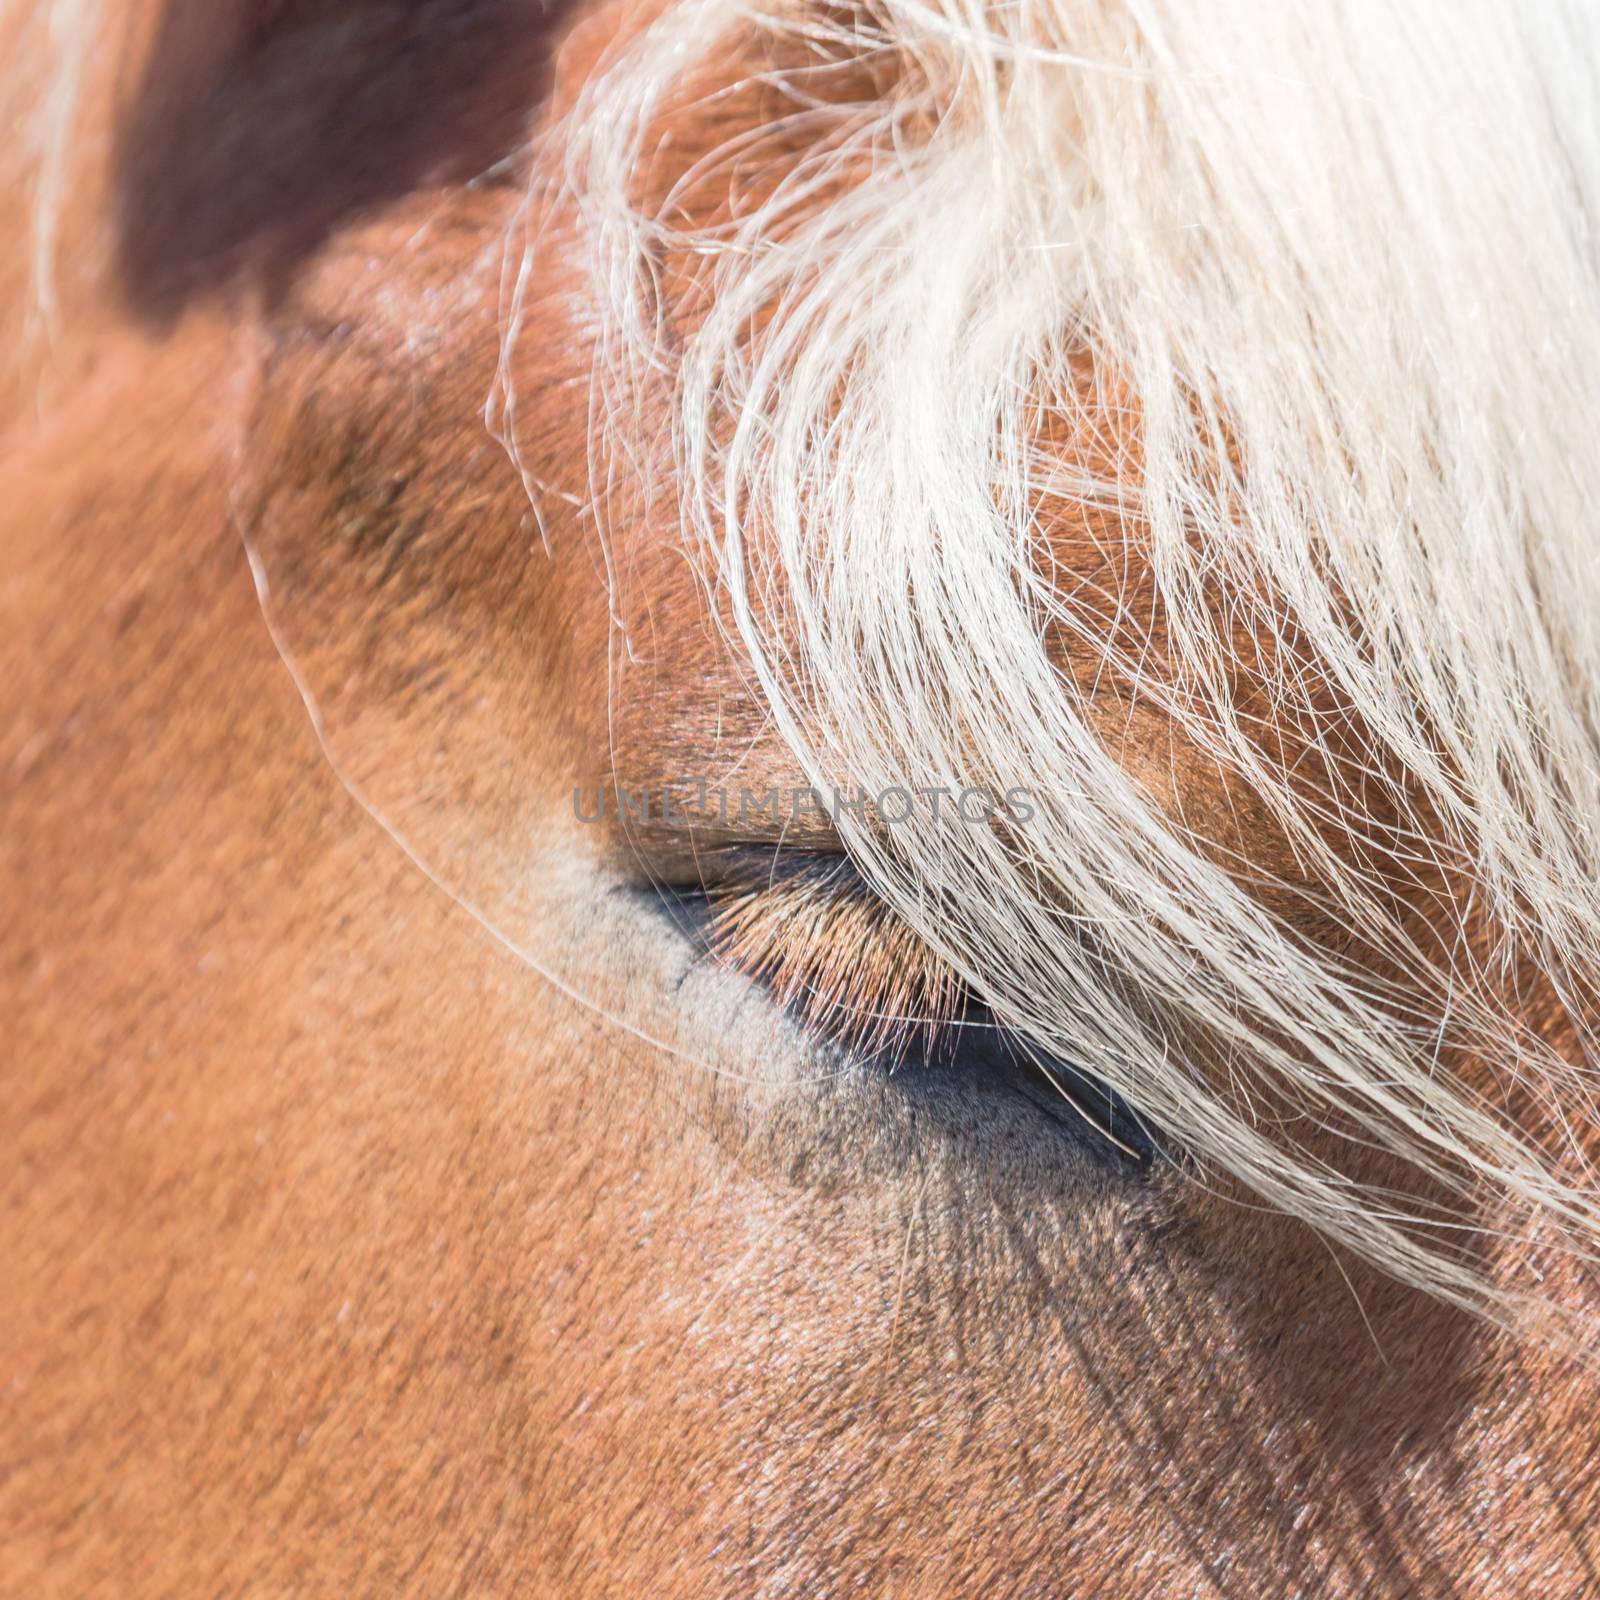 Beautiful eye of Holland Draft Horse close-up by trongnguyen